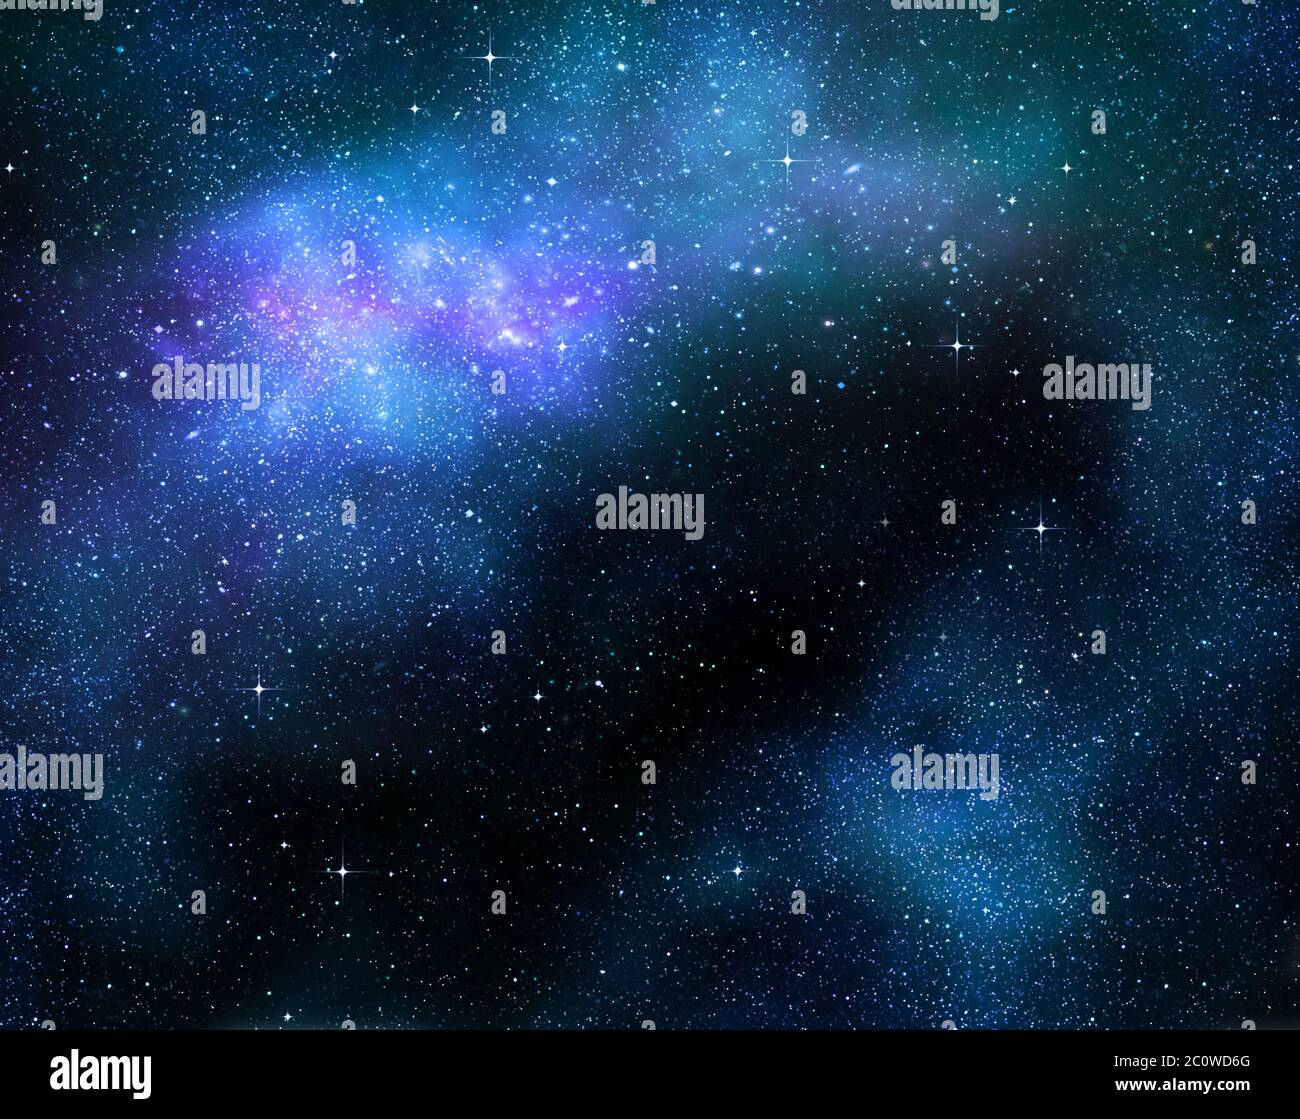 space night nighttime field illustration bright shiny deep galaxy wallpaper Stock Photo